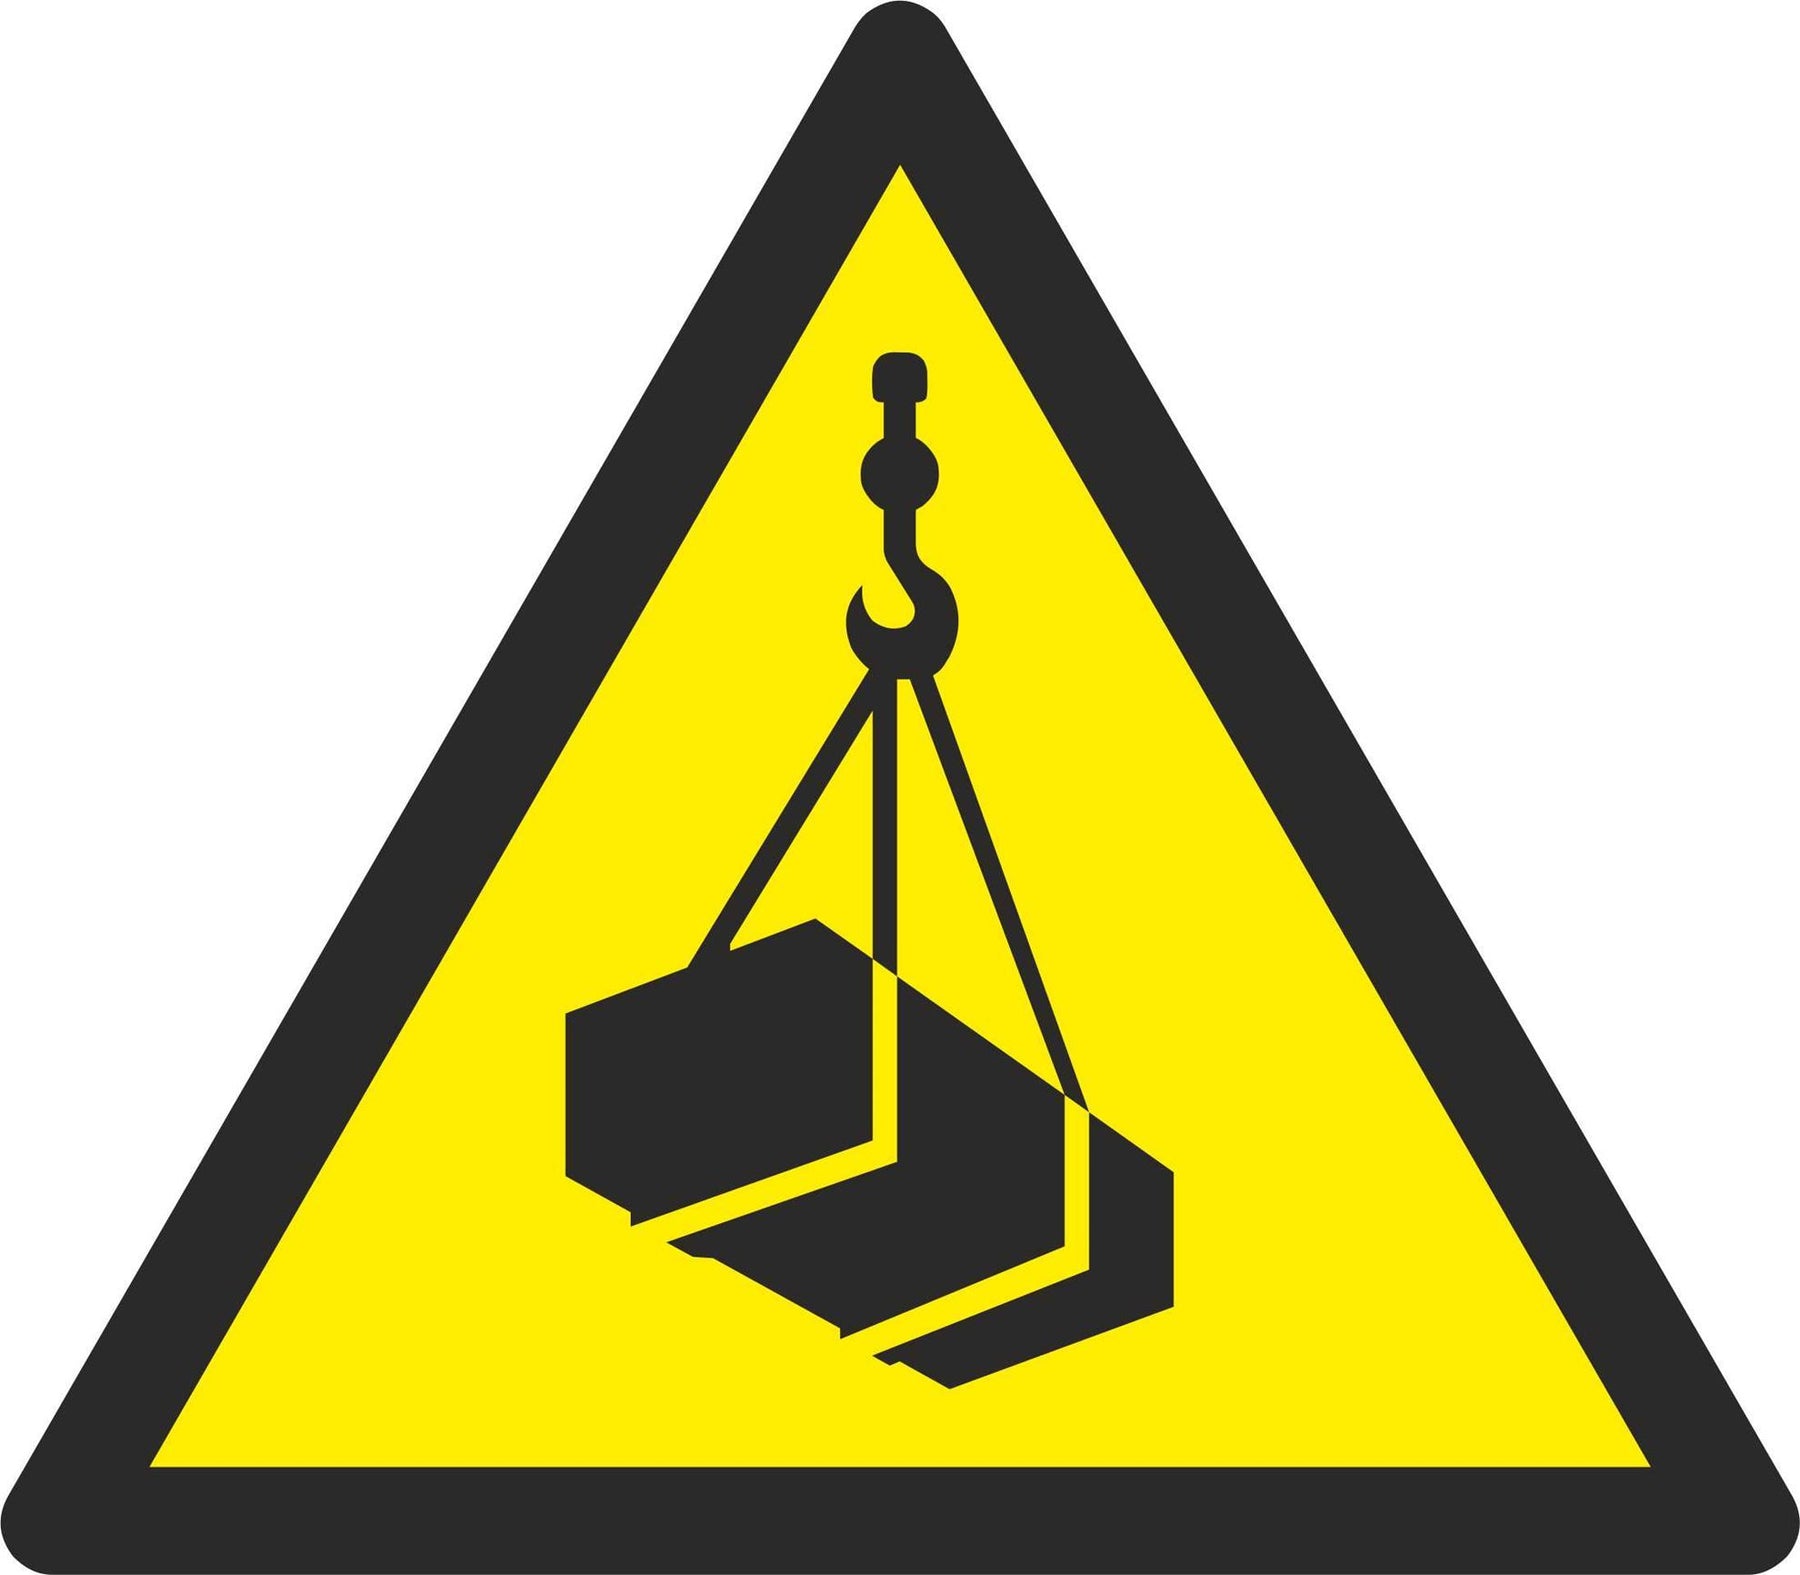 Warning Overhead load - Symbol sticker sheet